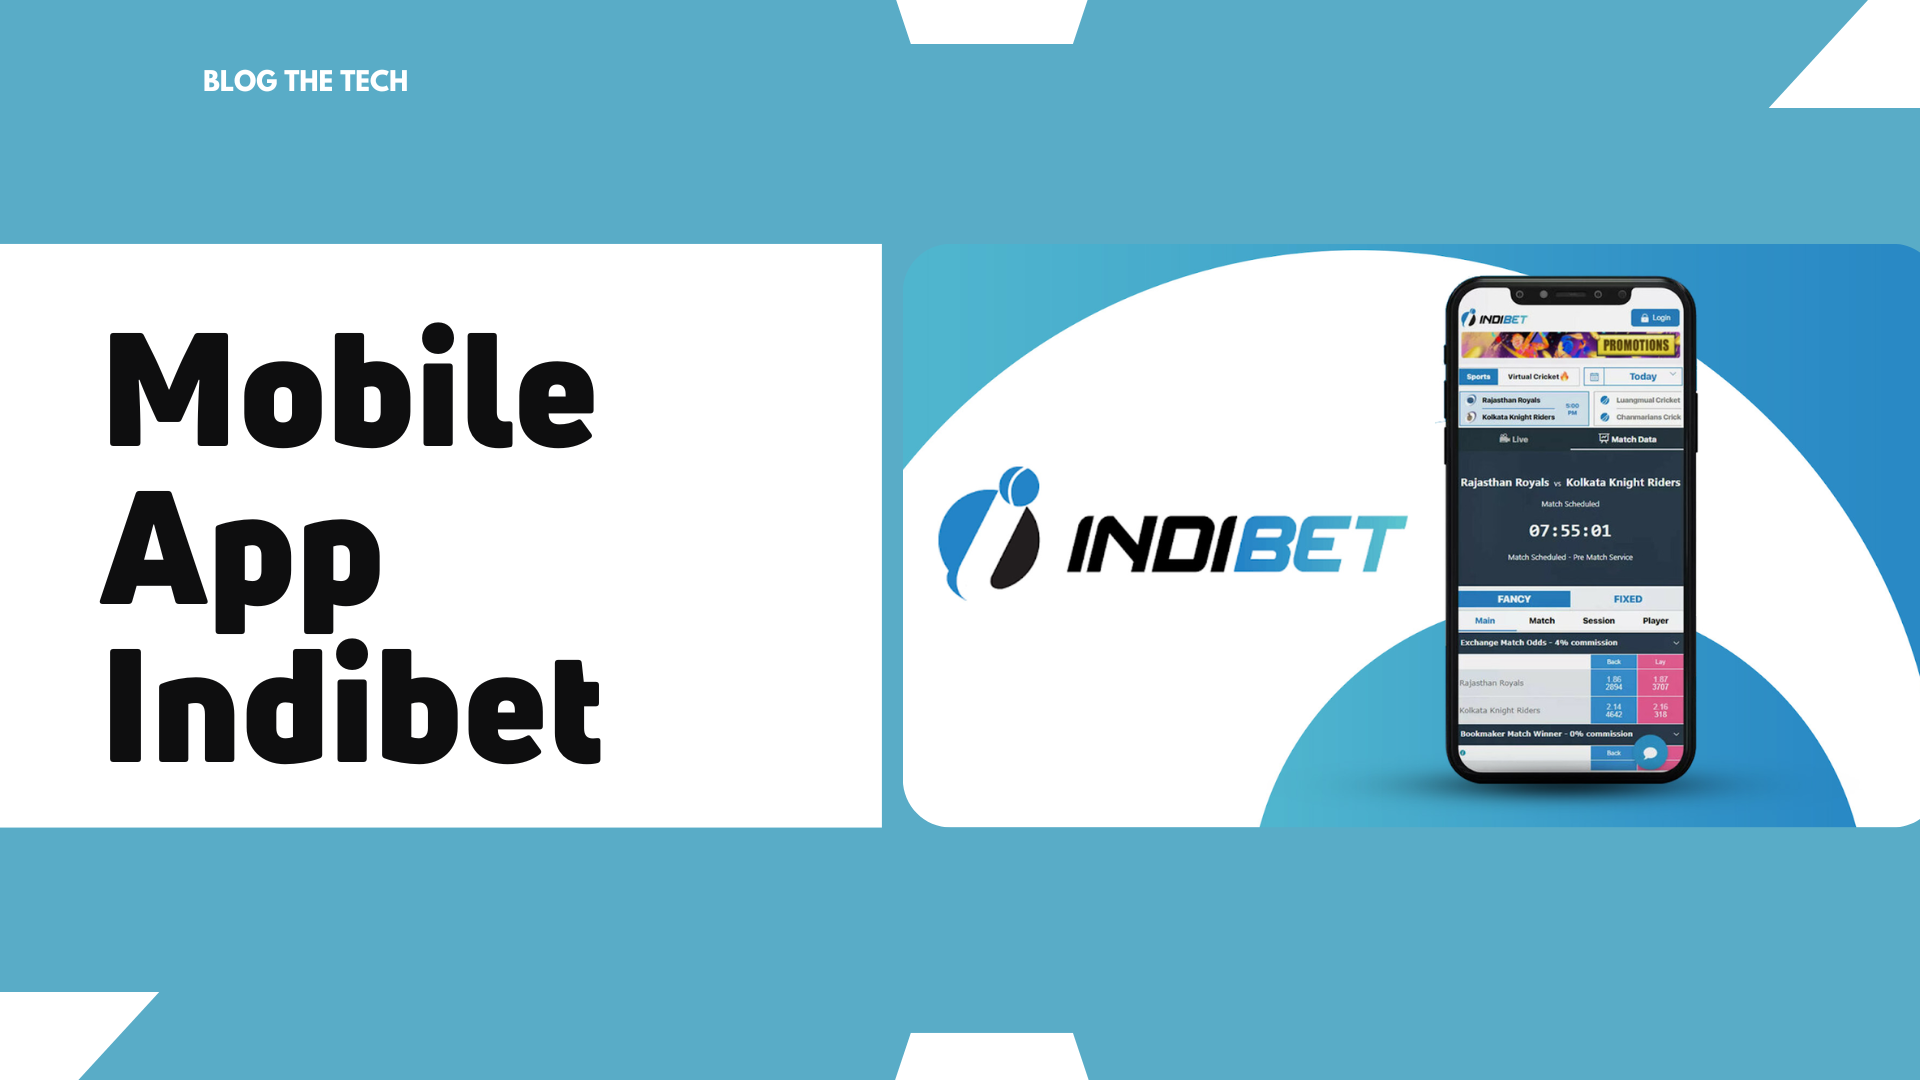 Mobile App Indibet